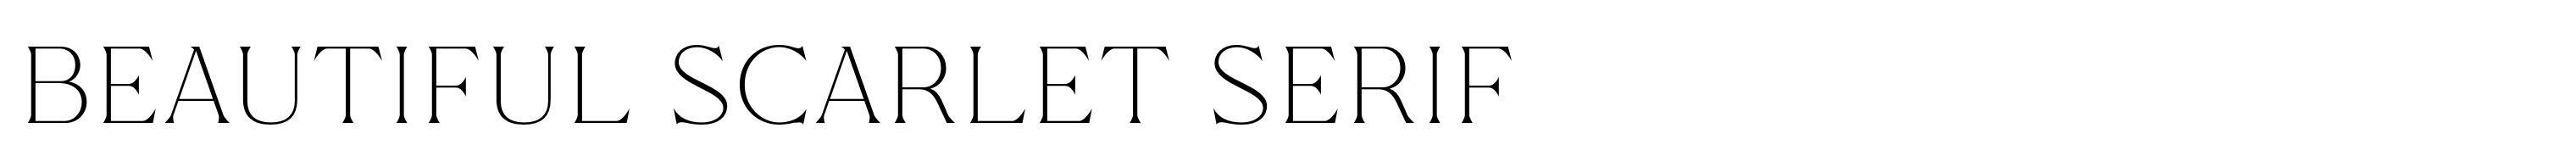 Beautiful Scarlet Serif